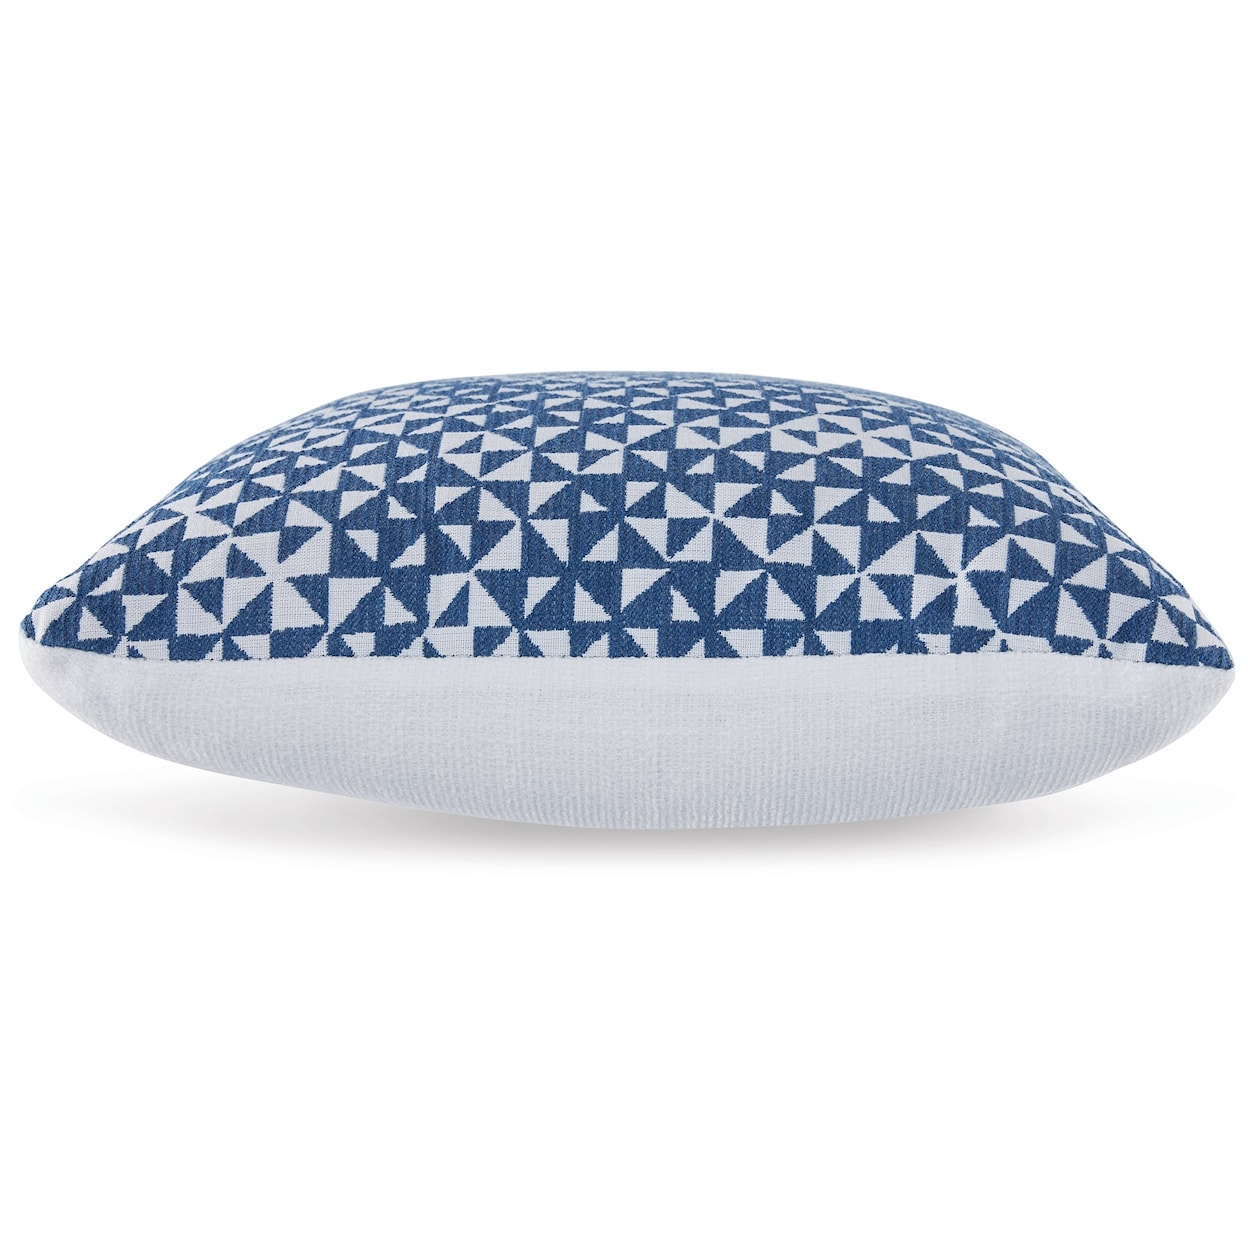 Ashley Furniture Signature Design Jaycott Next-Gen Nuvella Pillow (Set Of 4)